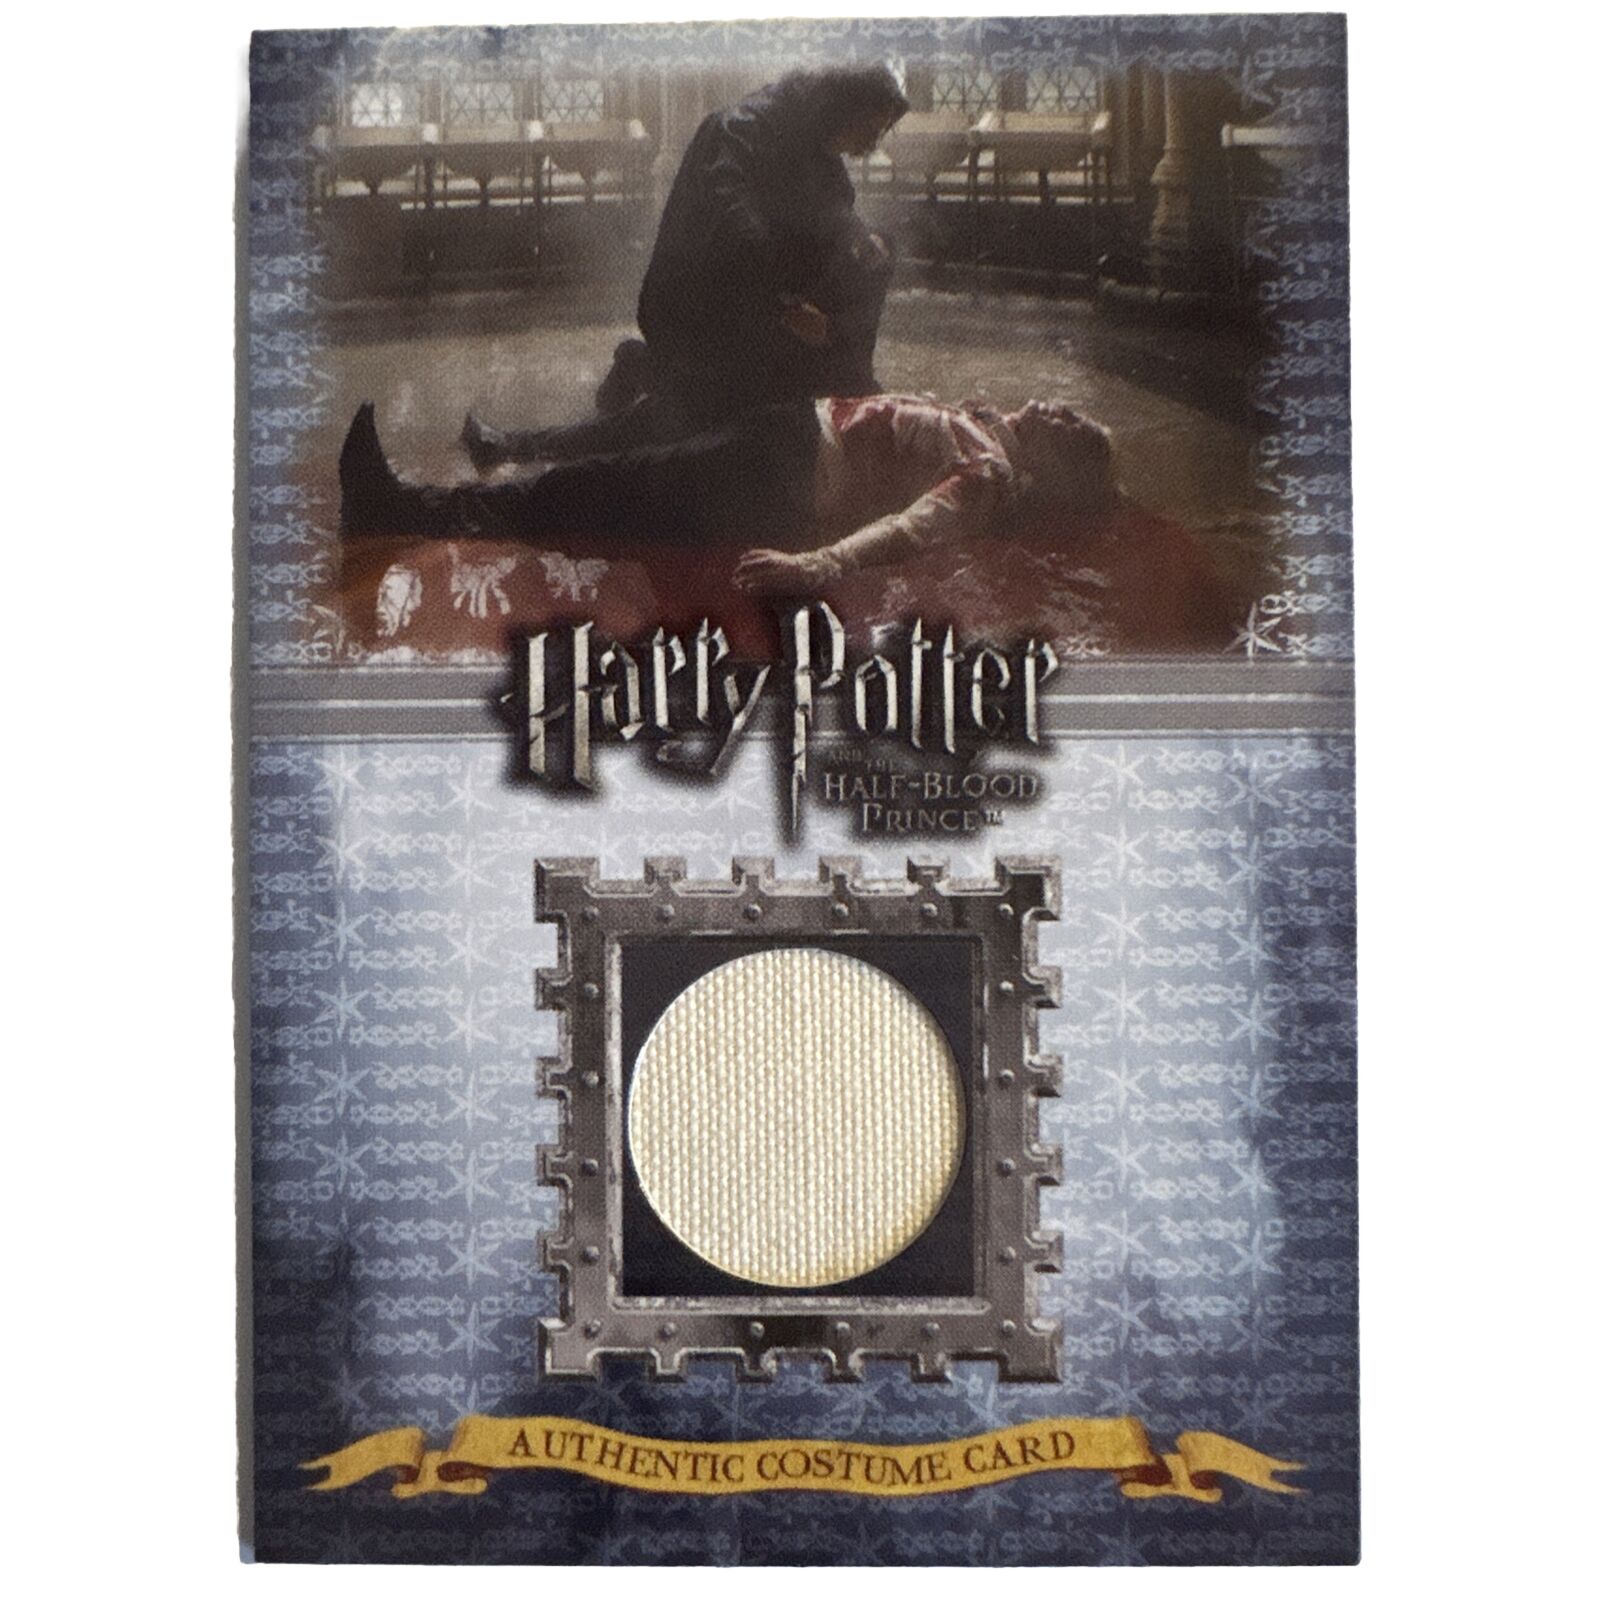 Harry Potter And The Half-Blood Prince Artbox Costume Card Tom Felton Draco C4